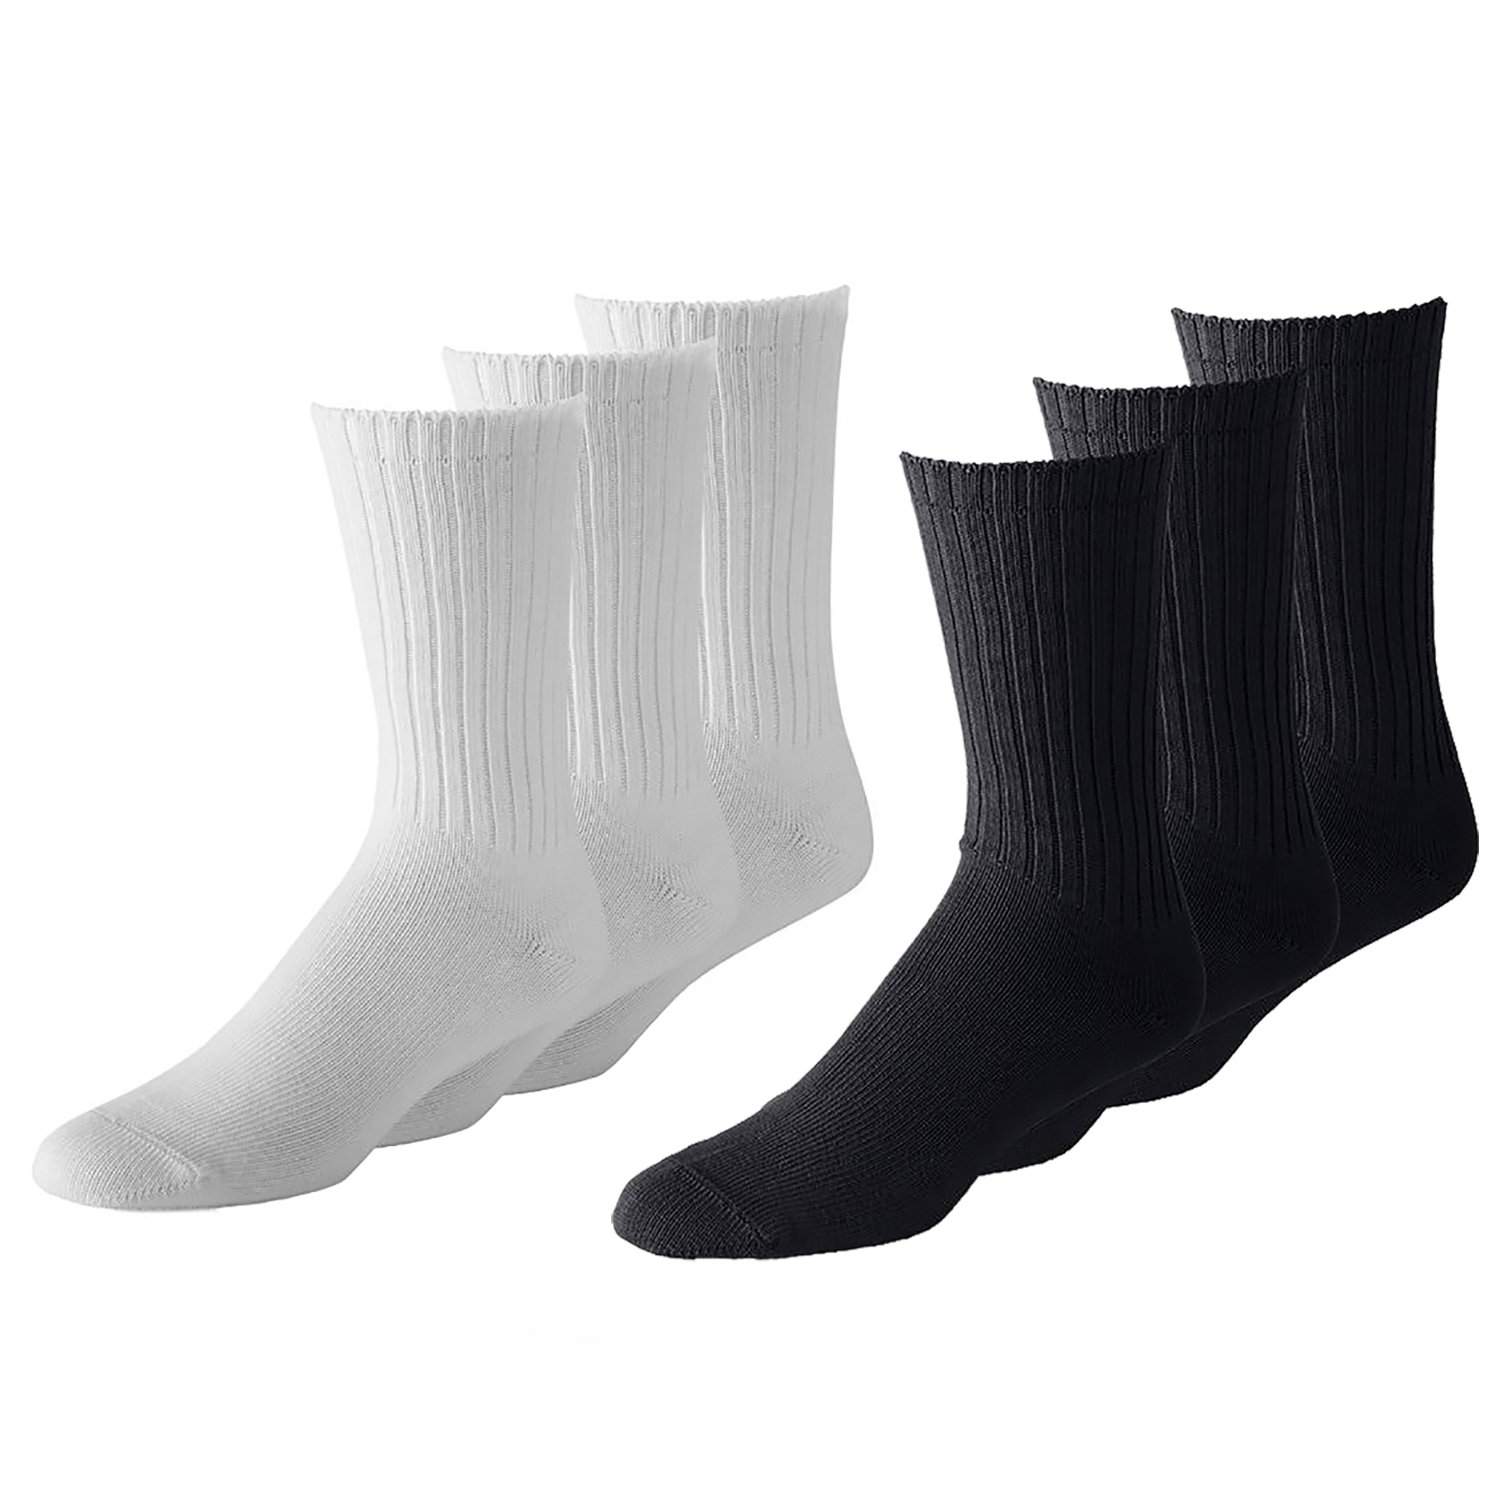 Mechaly Unisex Crew Athletic Sports Cotton Socks 25 Pack